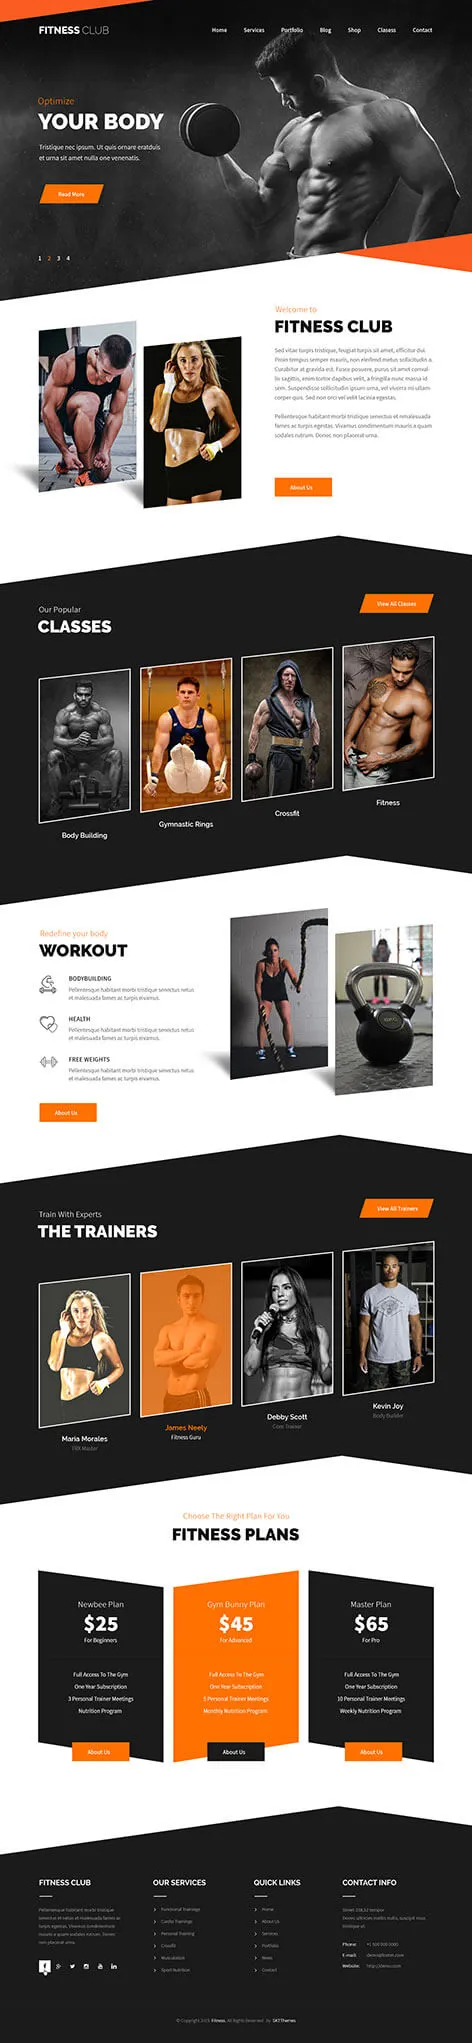 fitness center WordPress theme